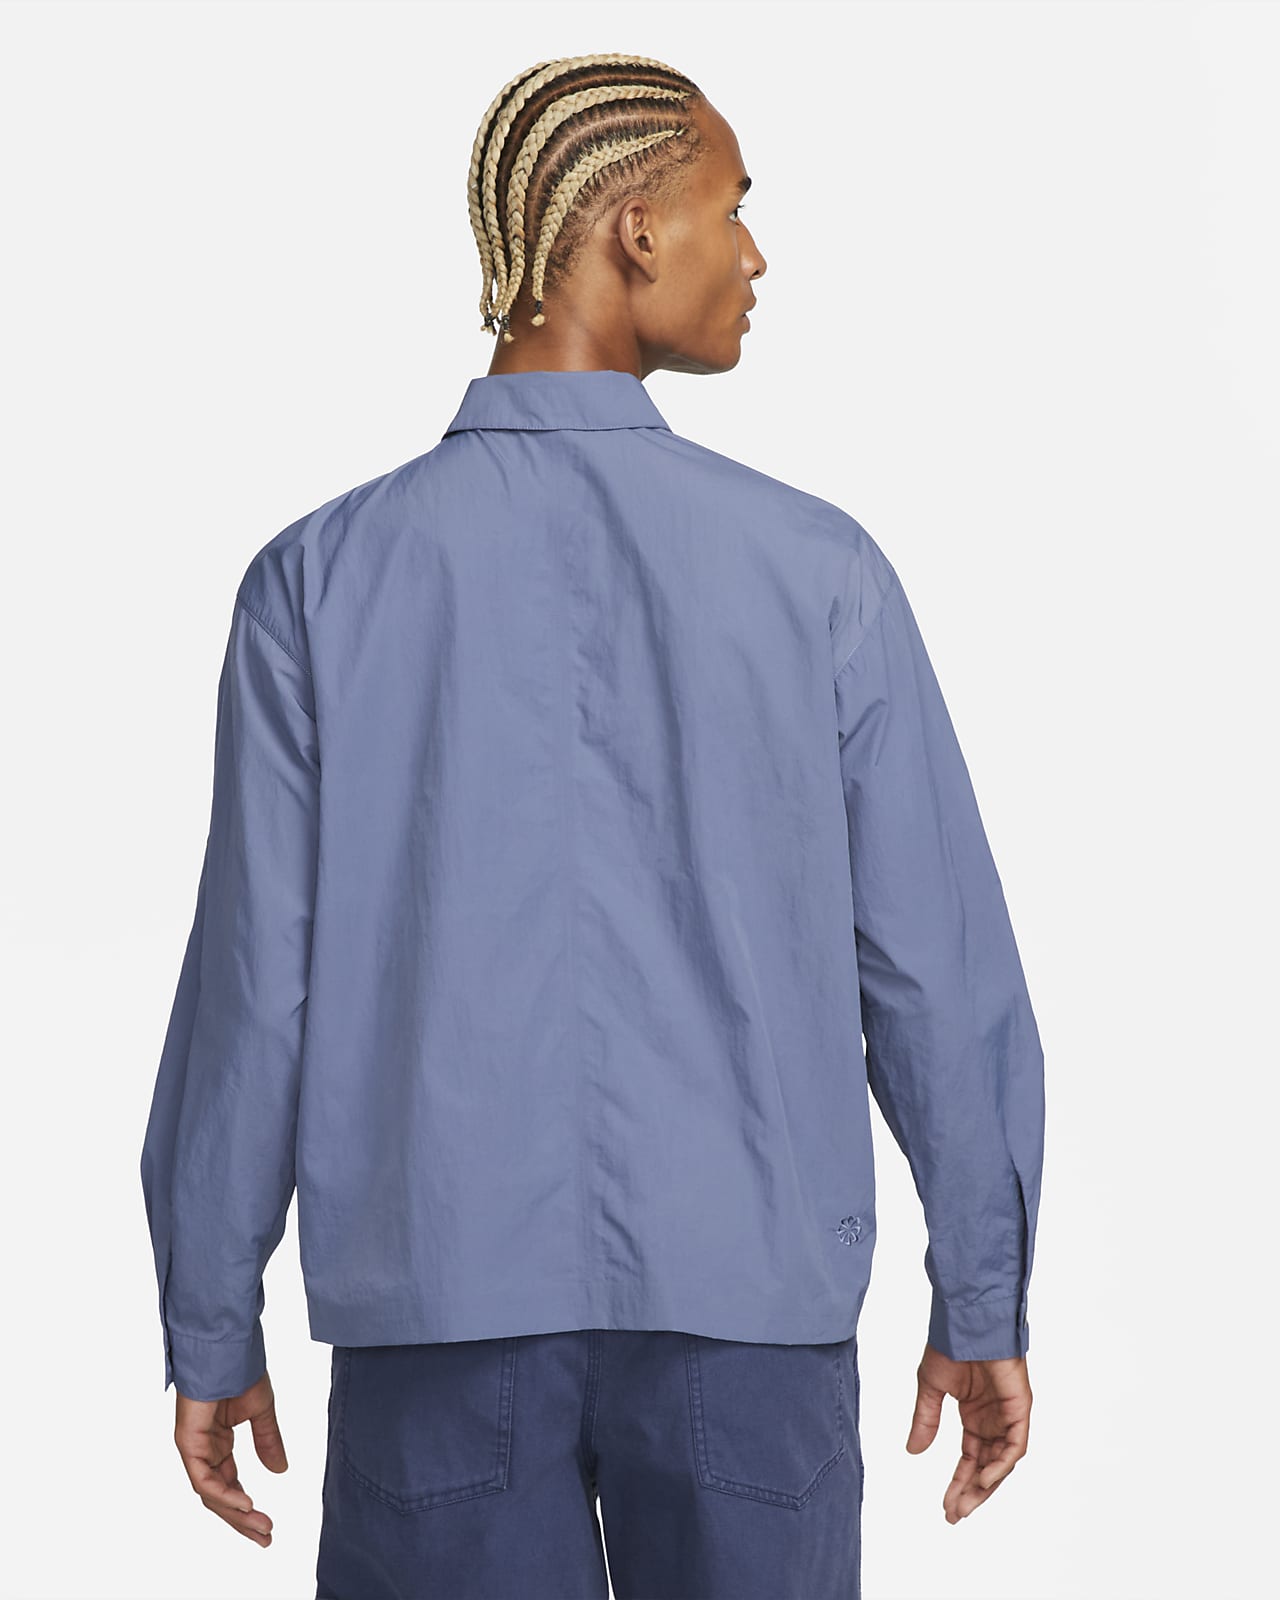 Nike Sportswear Tech Pack Men's Woven Long-Sleeve Shirt